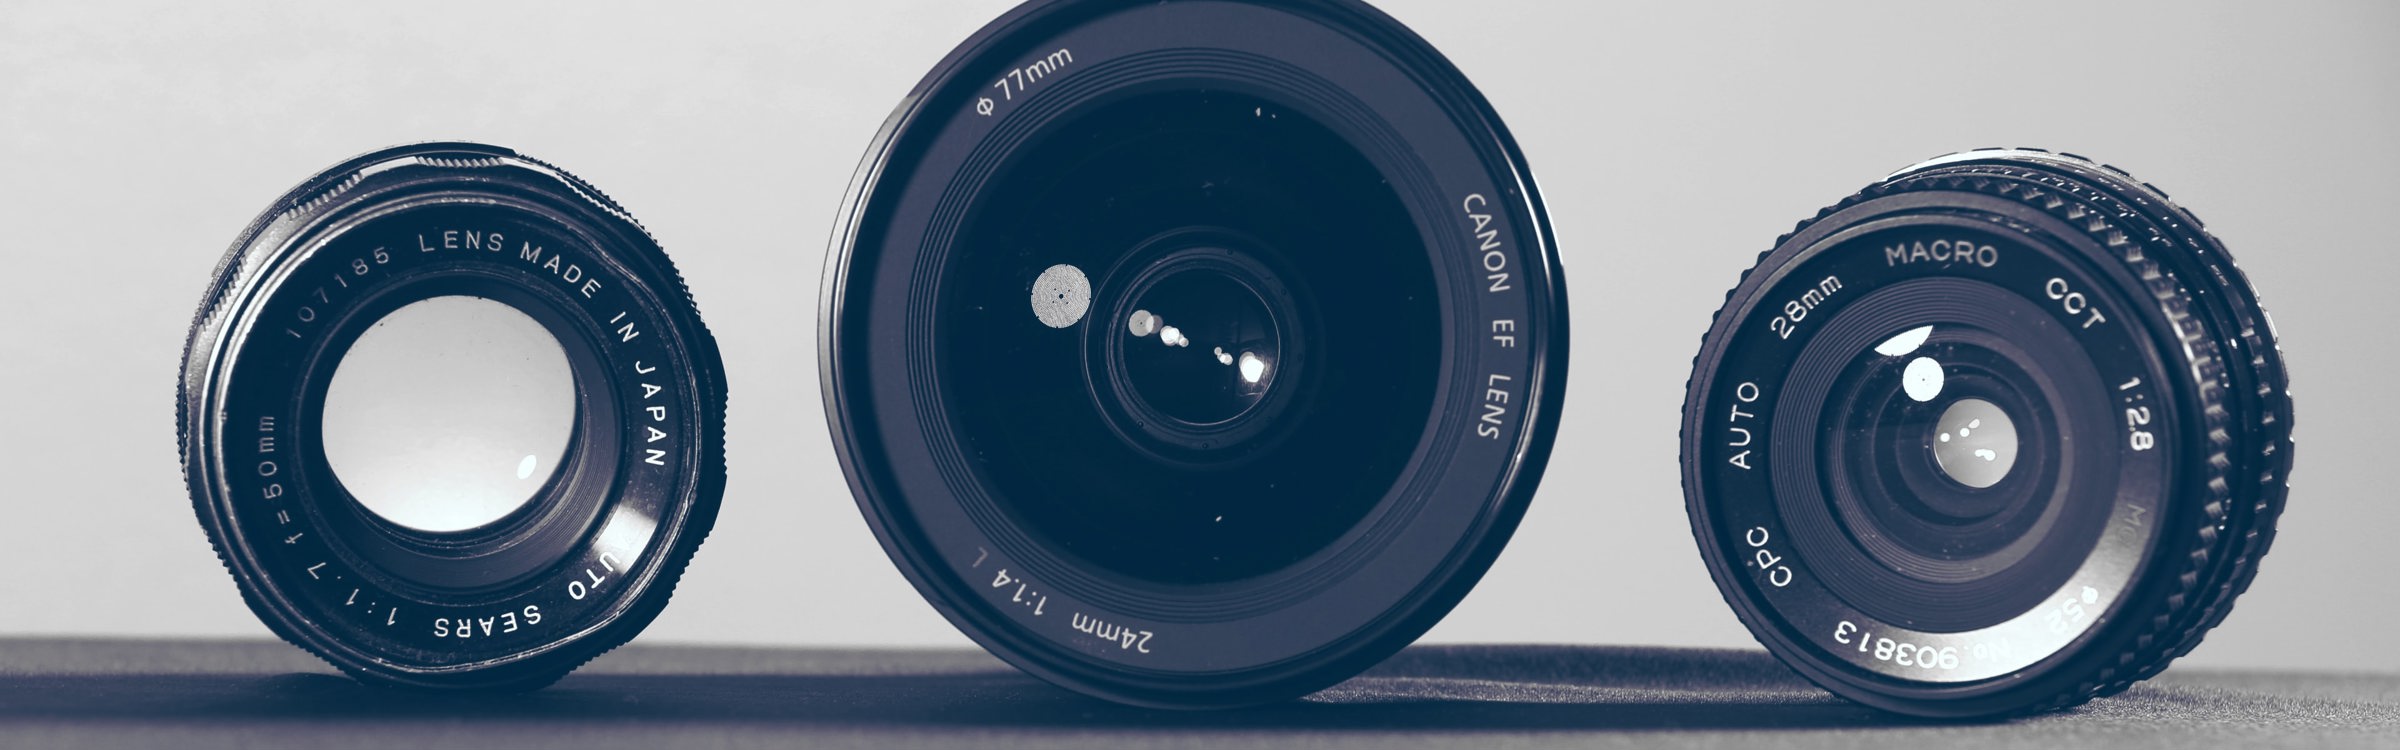 Three camera lenses of varying sizes